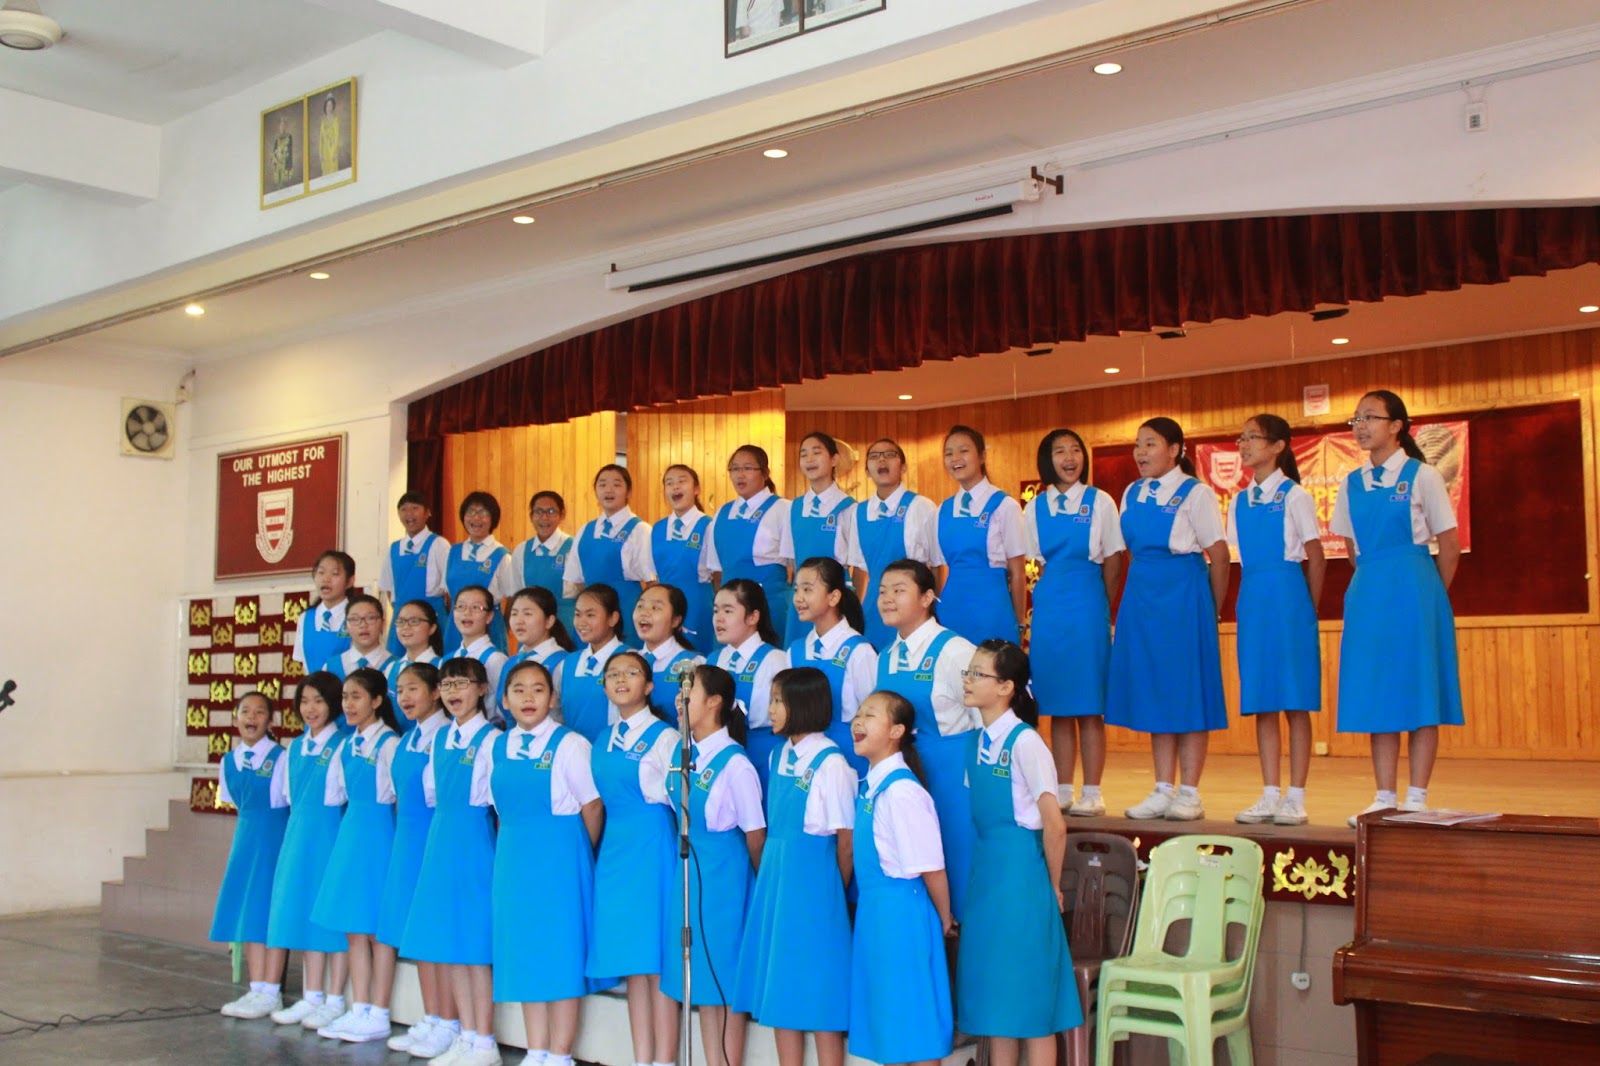 Our Argosy. SMK Methodist Girls, Ipoh, Perak: CHORAL SPEAKING 2014